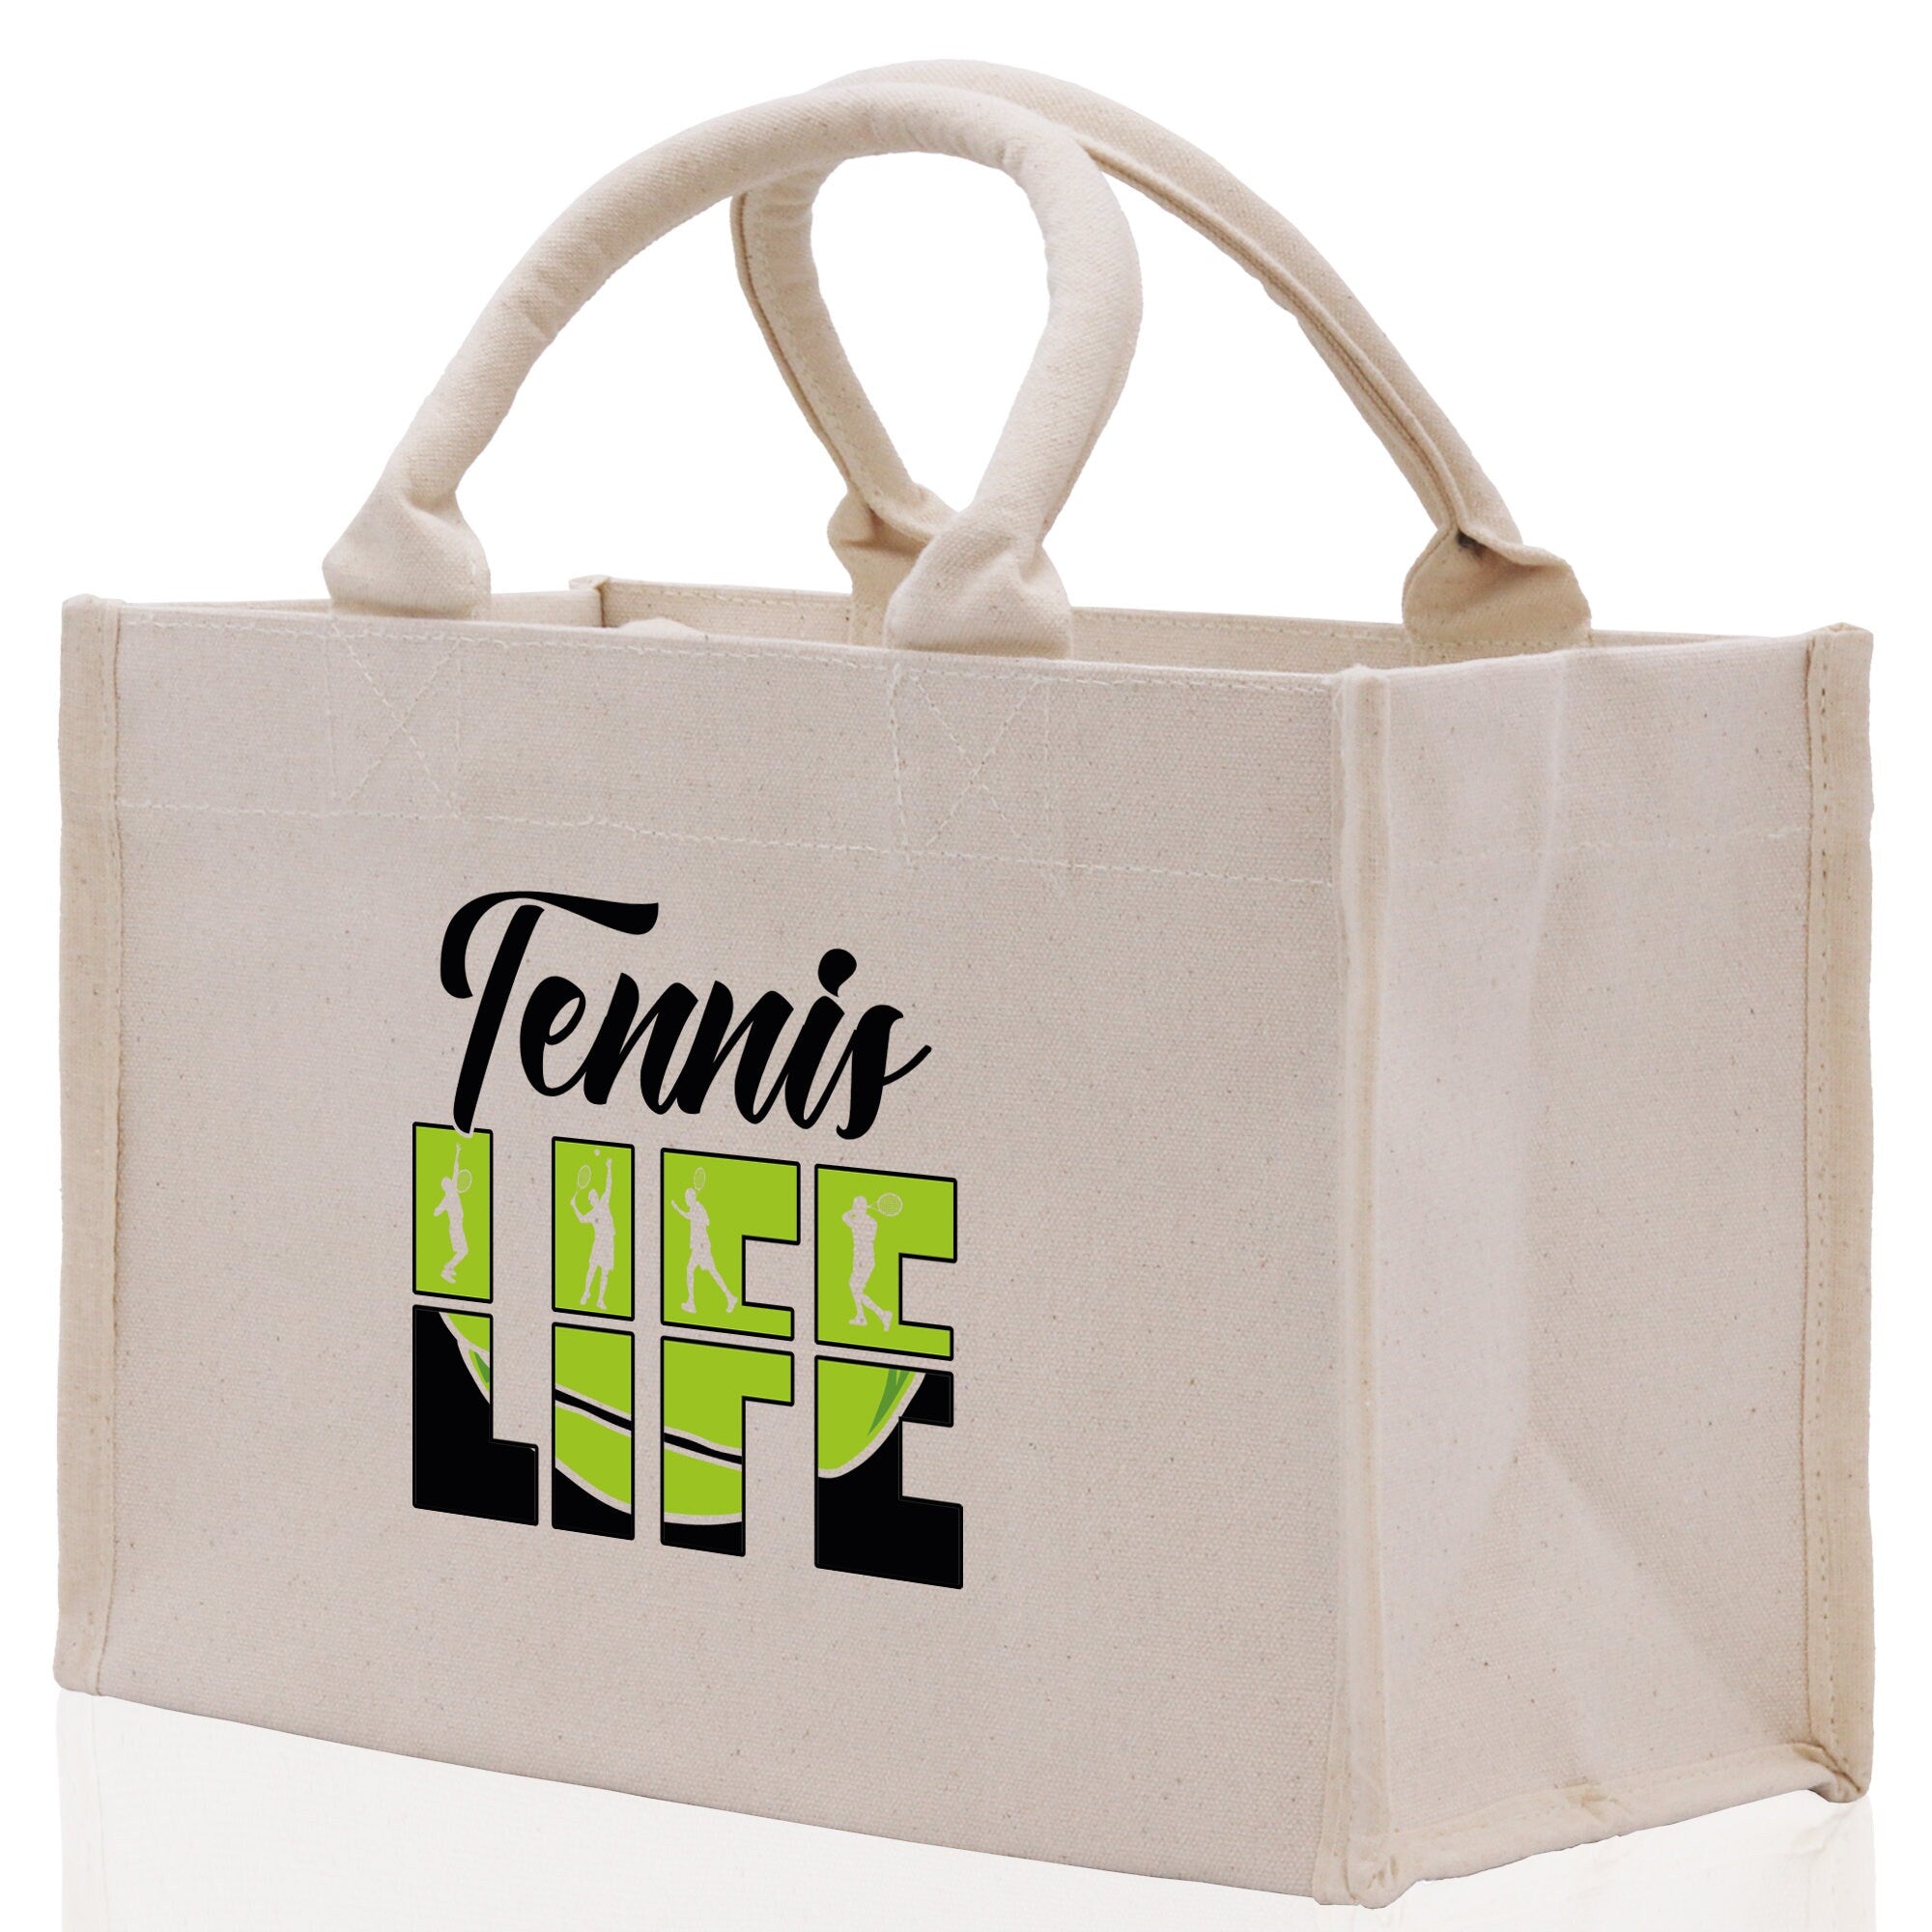 Tennis Life Cotton Canvas Tote Bag Gift for Tennis Lover Bag Tennis Coach Gift Bag